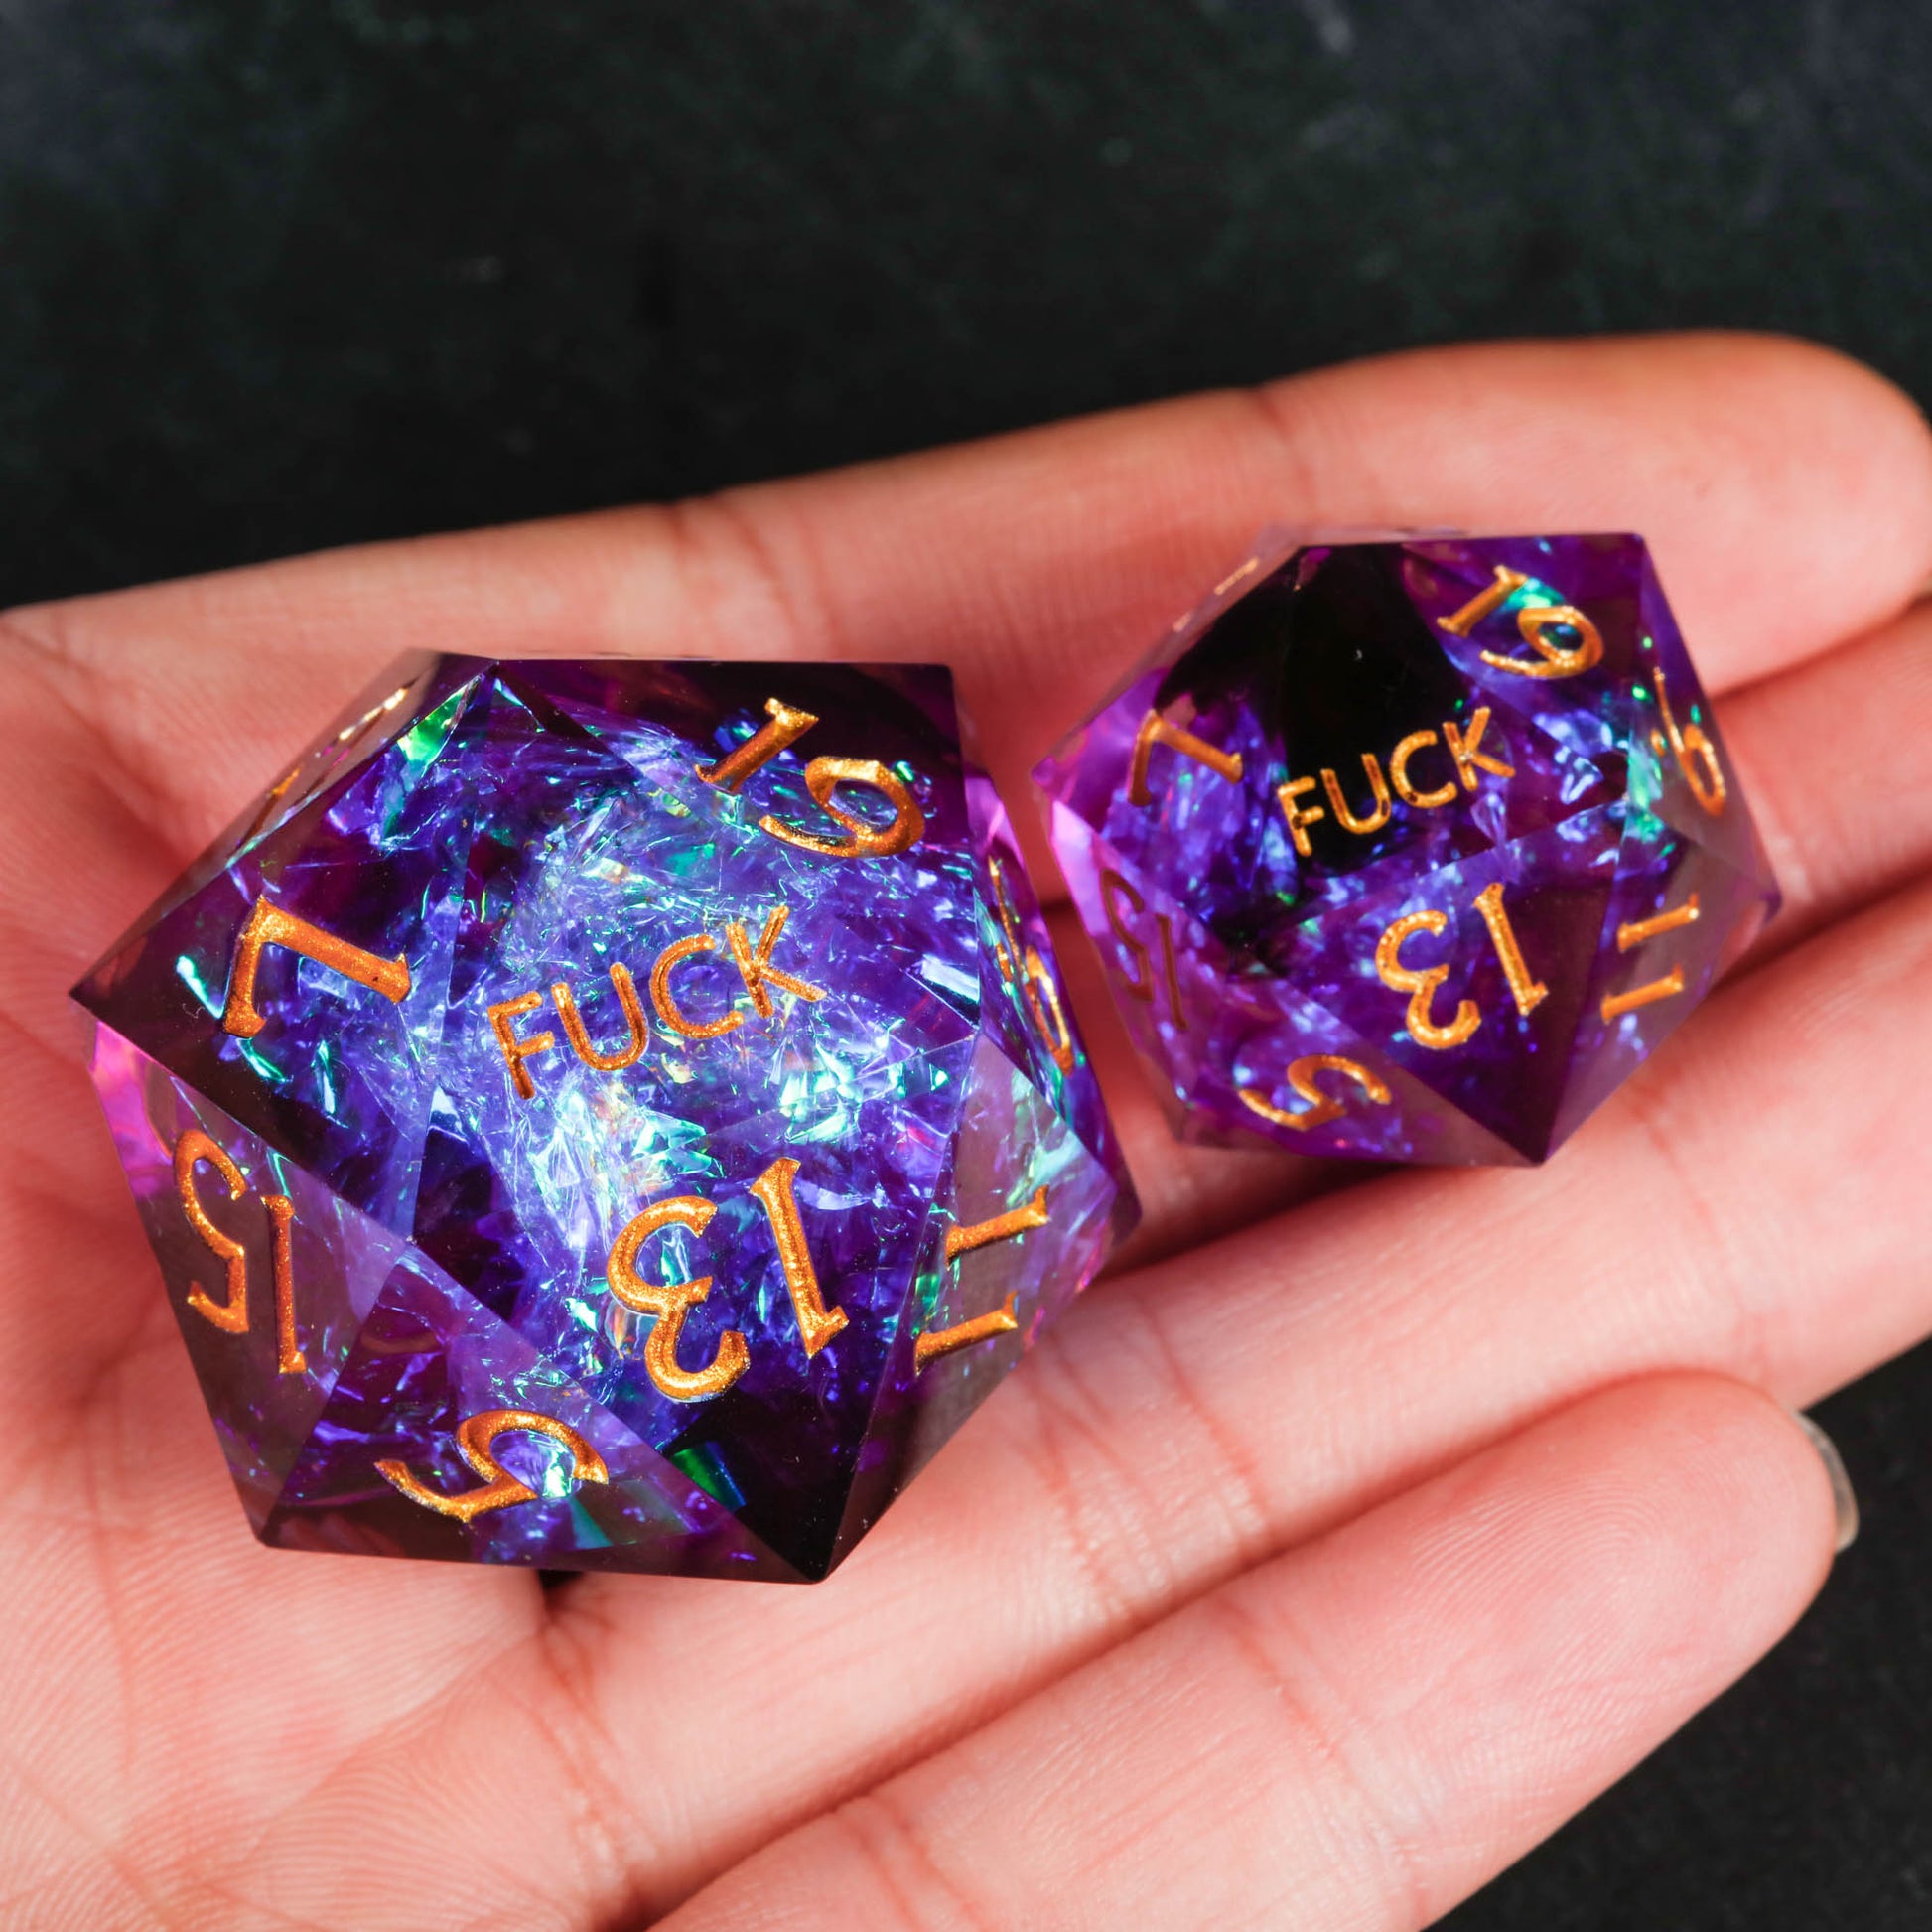 Purple Glitter Resin Dice YEET F*CK DnD D&D Dice Set - CrystalMaggie